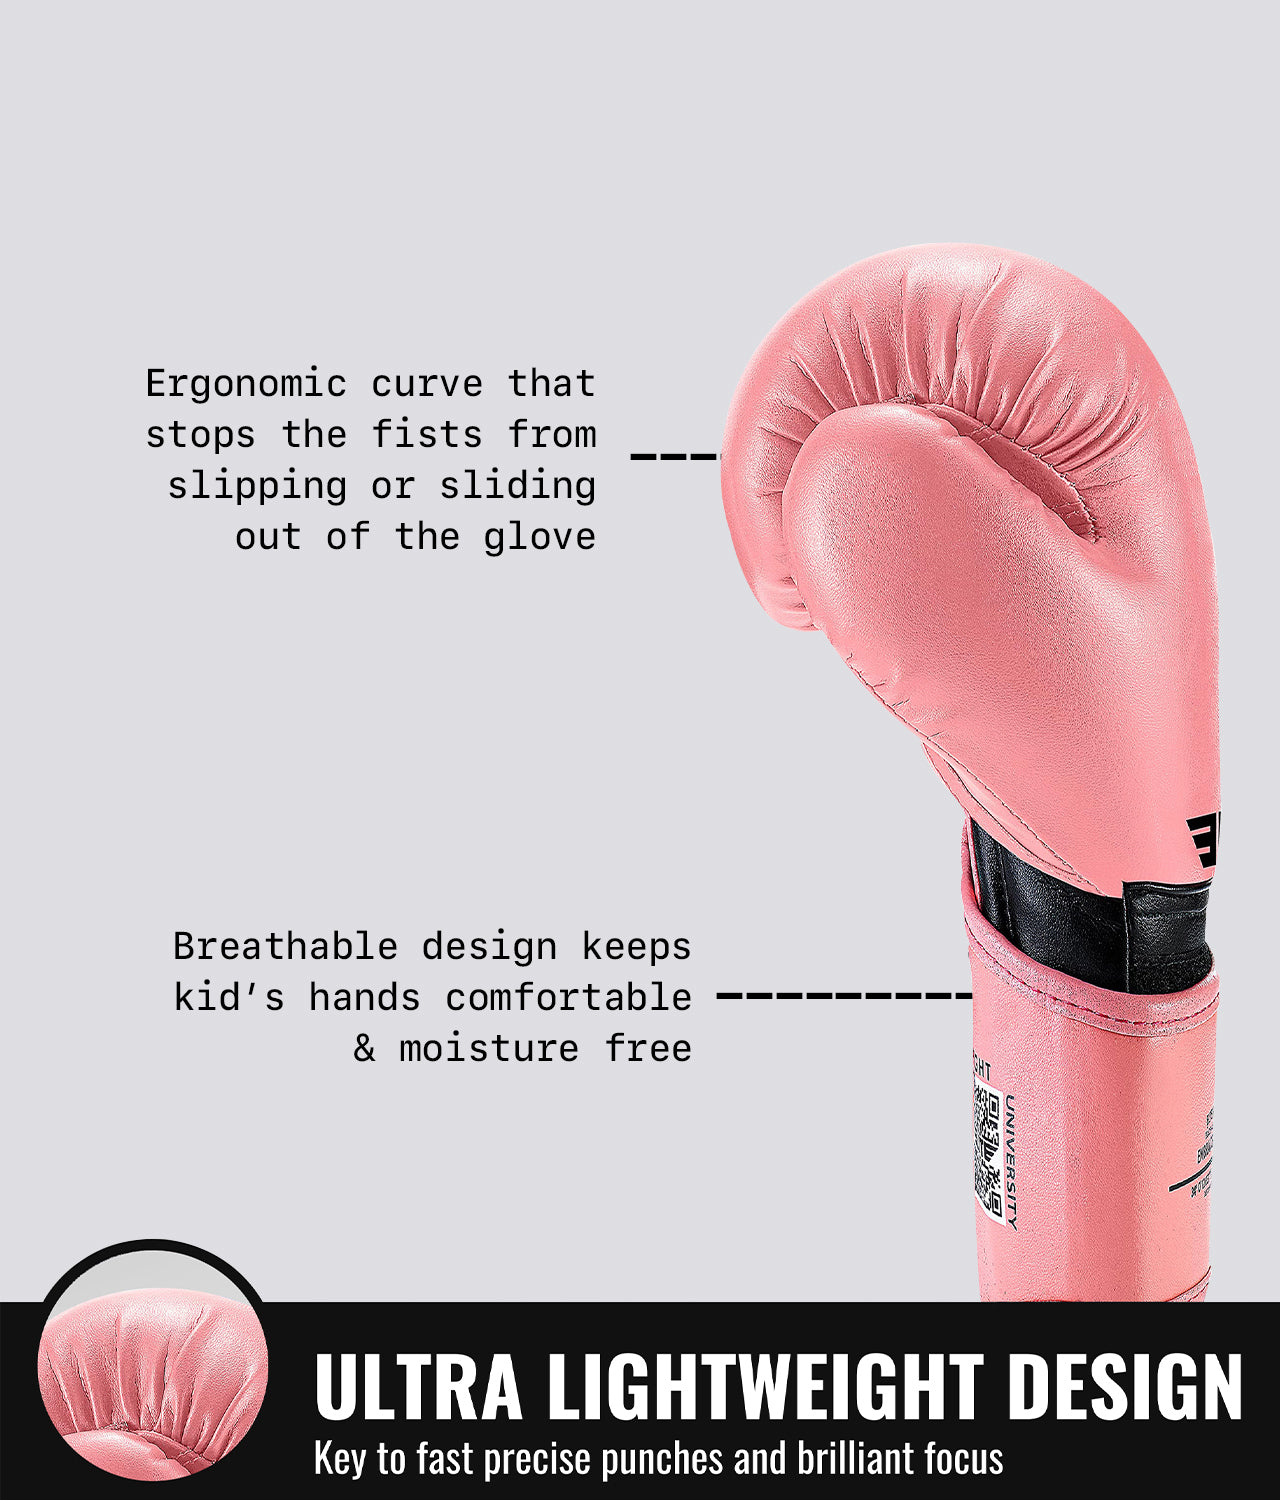 Elite Sports Plain Pink Kids' Boxing Gloves